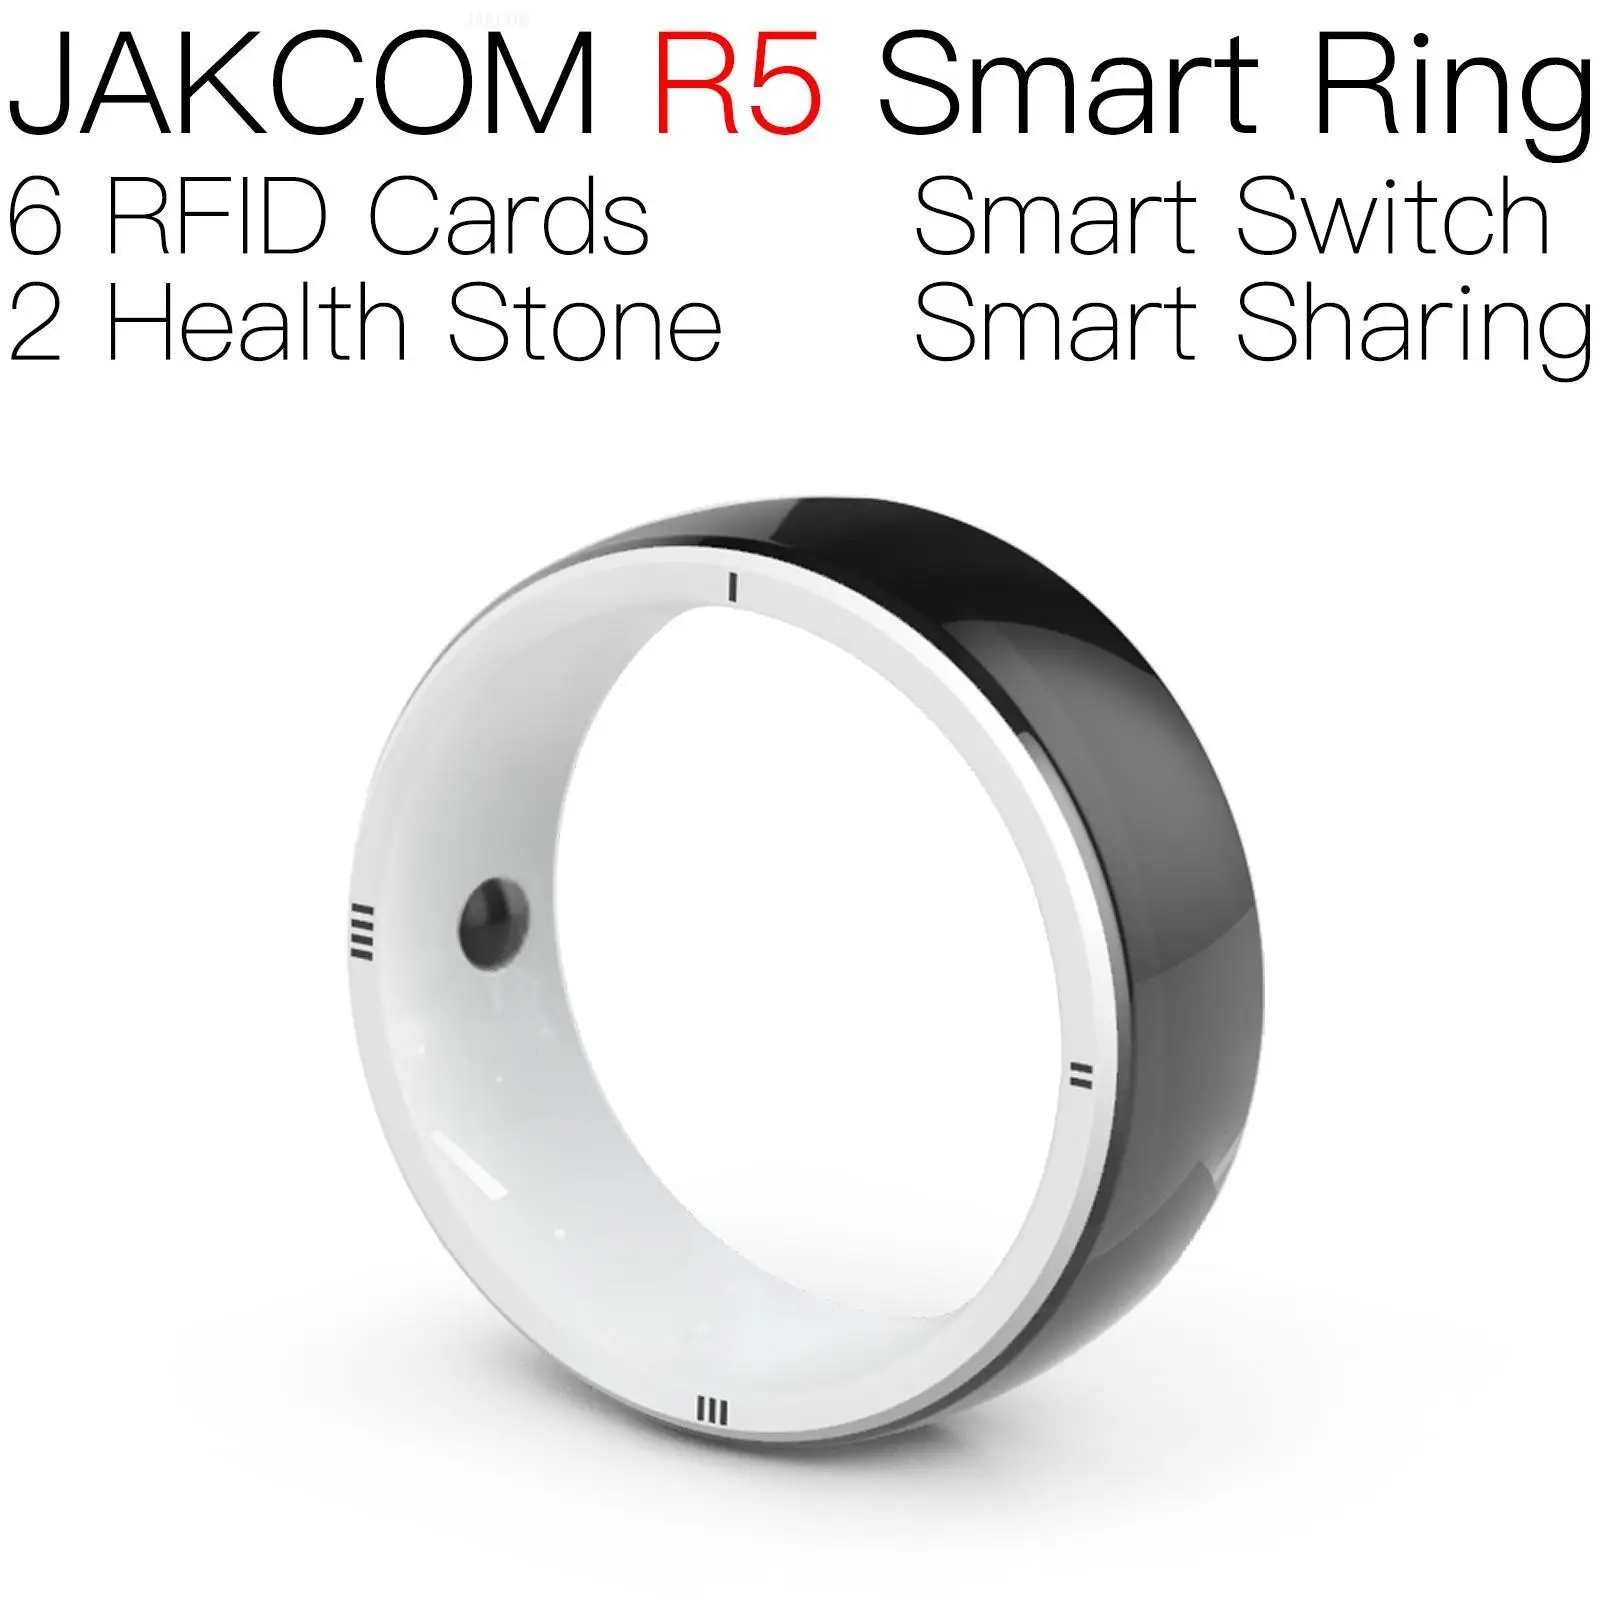 

JAKCOM R5 Smart Ring better than rif tag cloner netflix global account card code pour application iptv human microchip